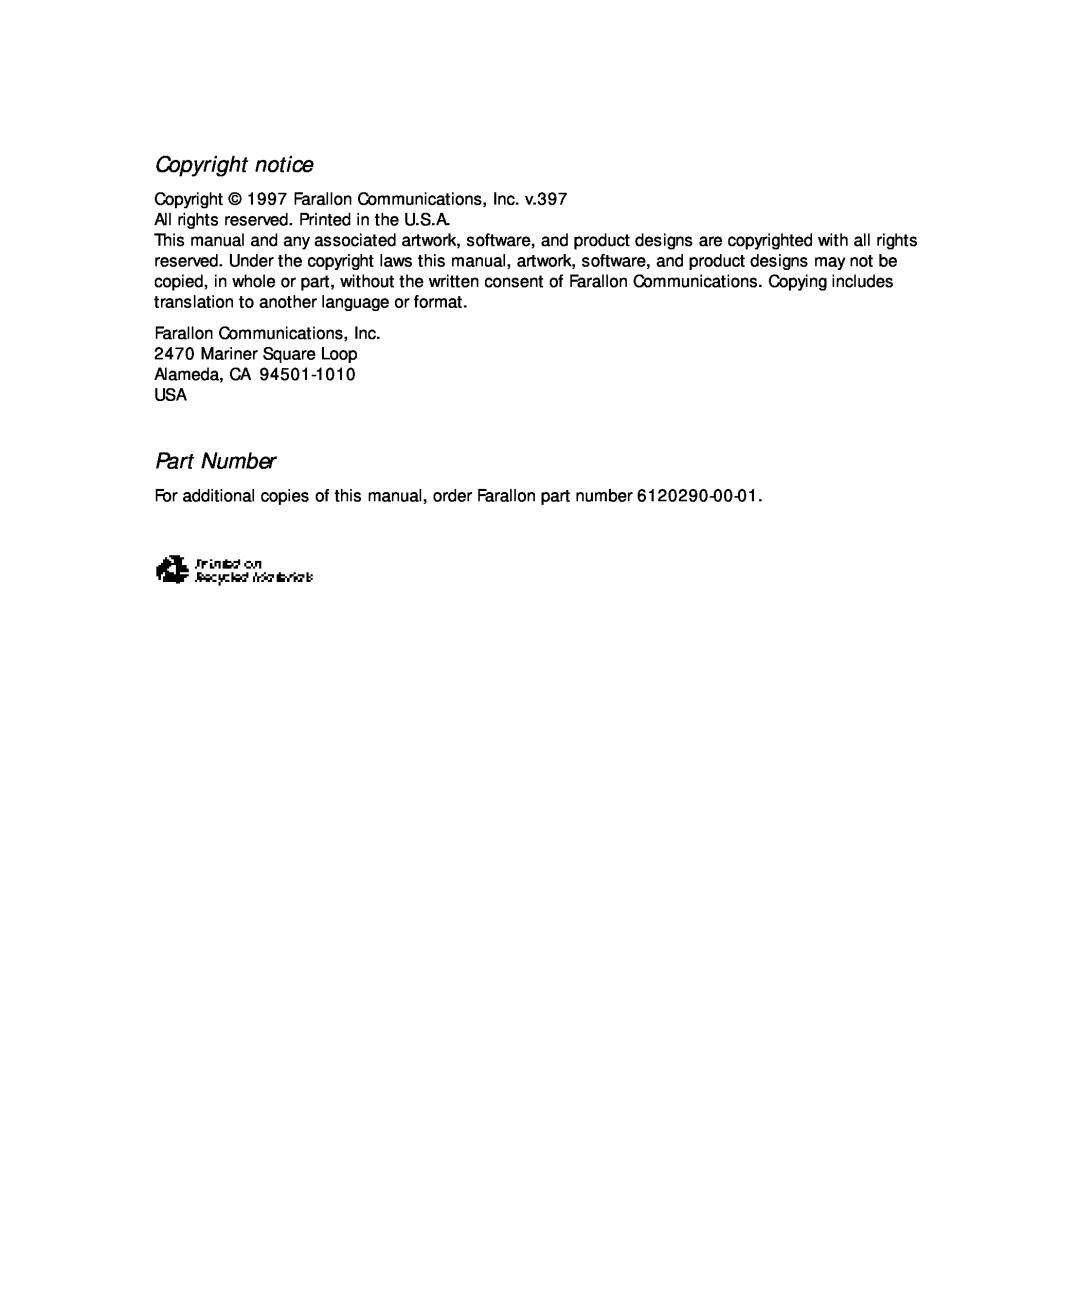 Farallon Communications PB 1400 appendix Copyright notice, Part Number 